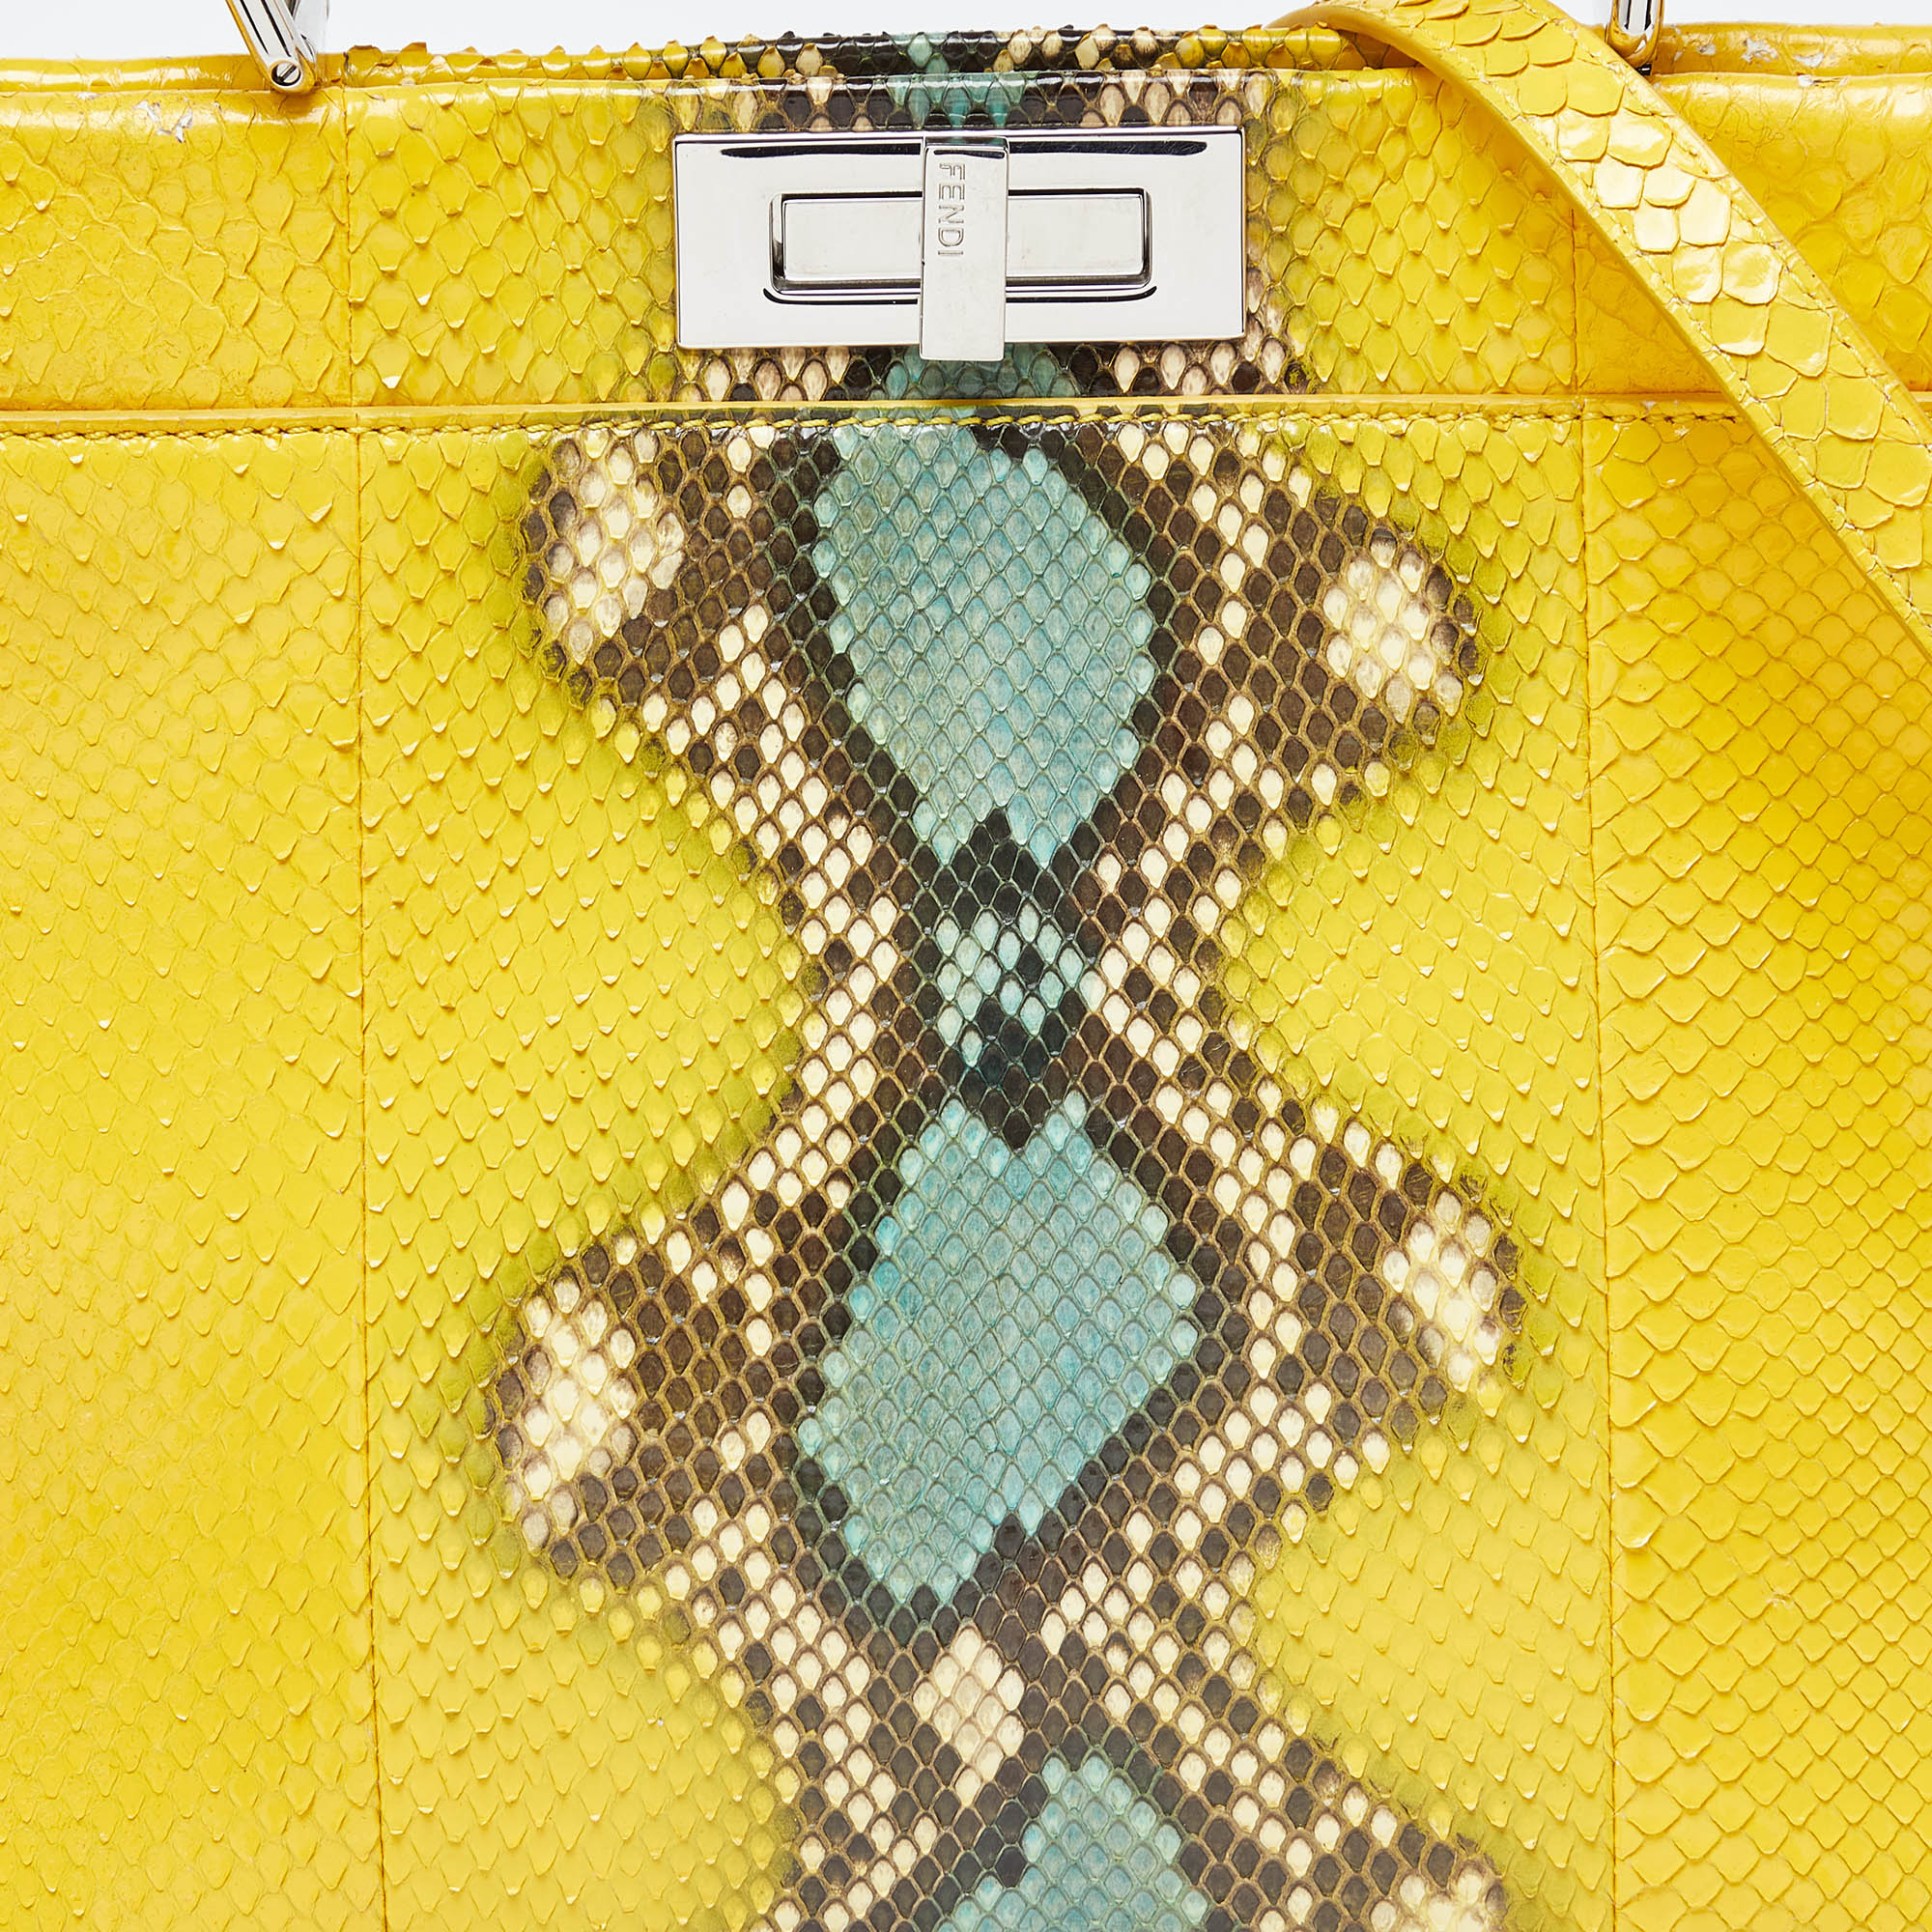 Fendi Yellow Python Medium Peekaboo Top Handle Bag